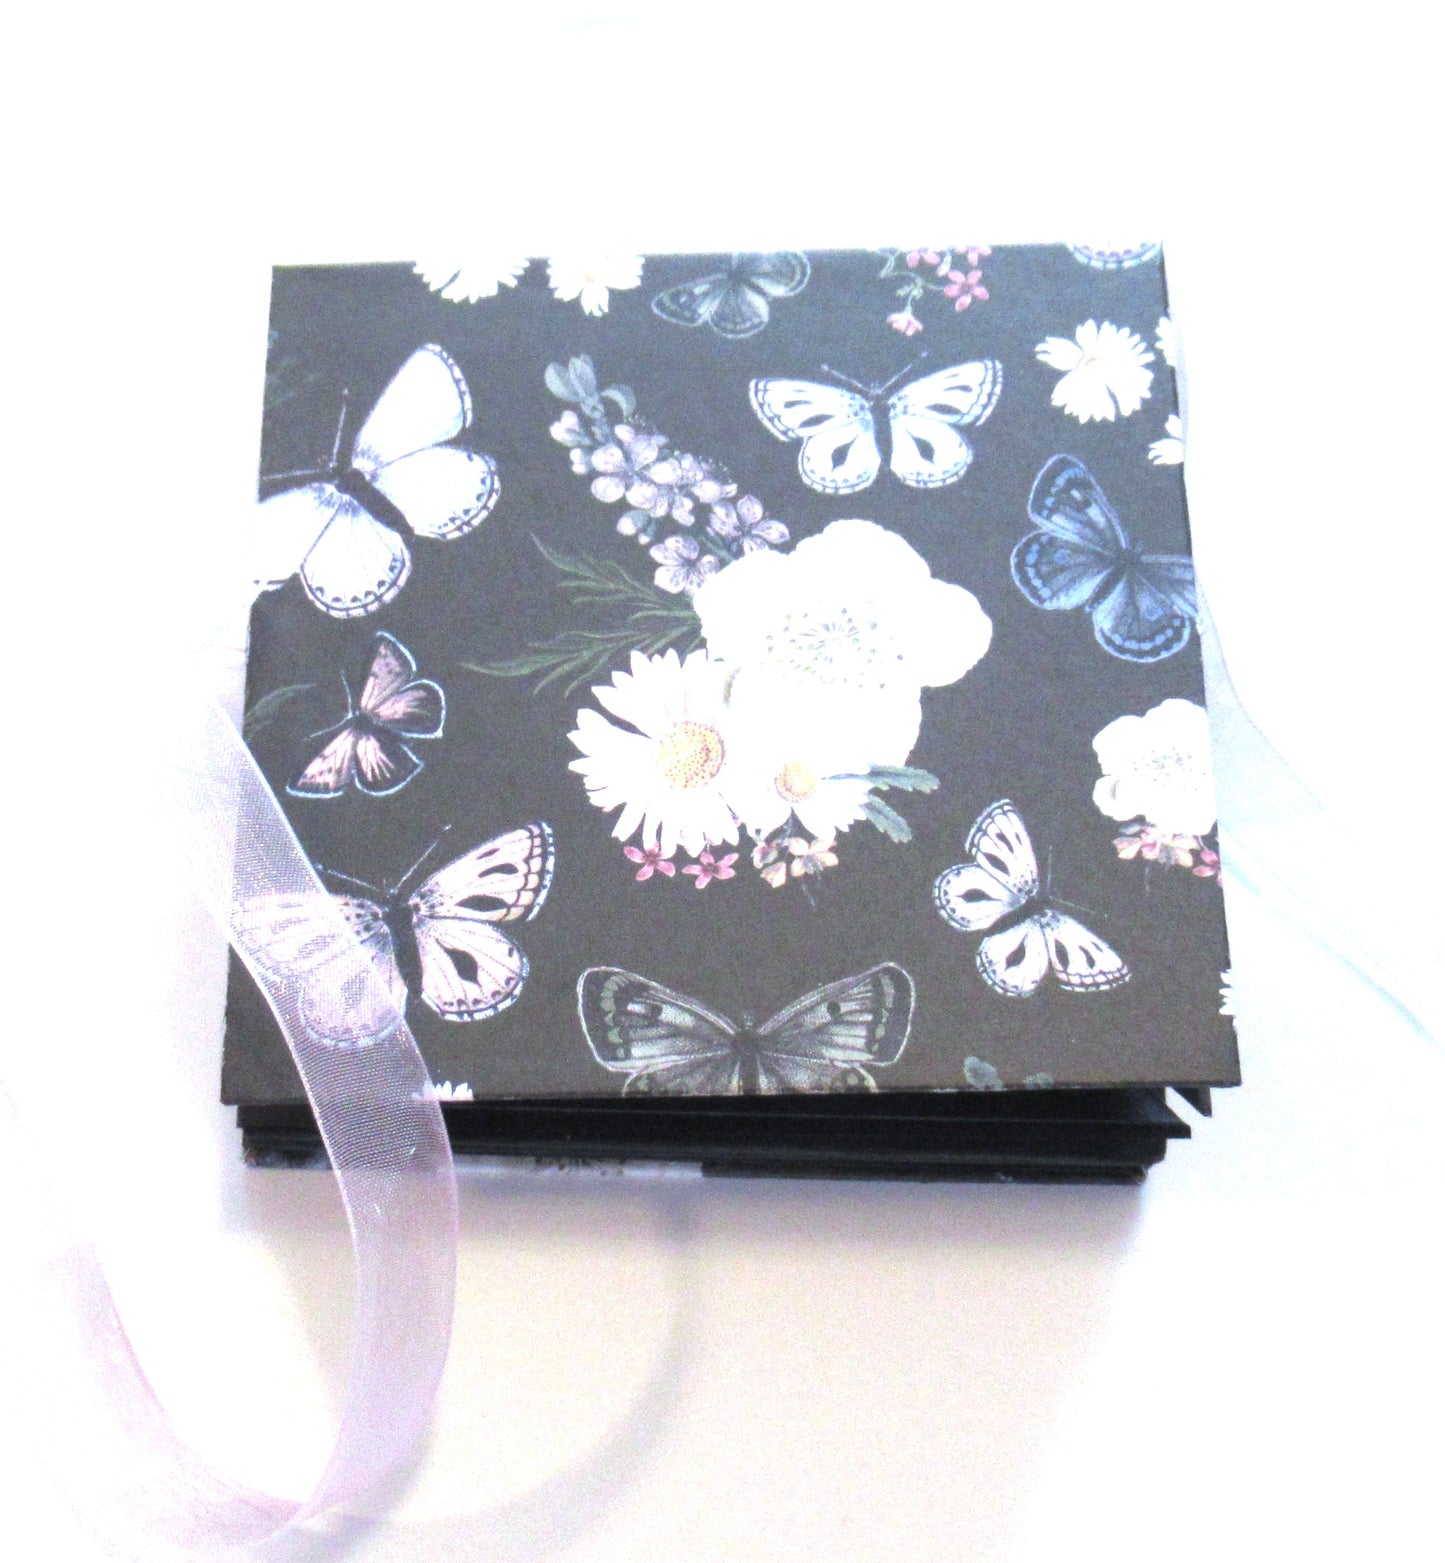 Deluxe ACCORDION Mini ALBUM - Handcrafted Photo Album - Stationery - Literacy Project - Mini Memory Book - Mini WEDDING Album - Mini Memory Book - 115